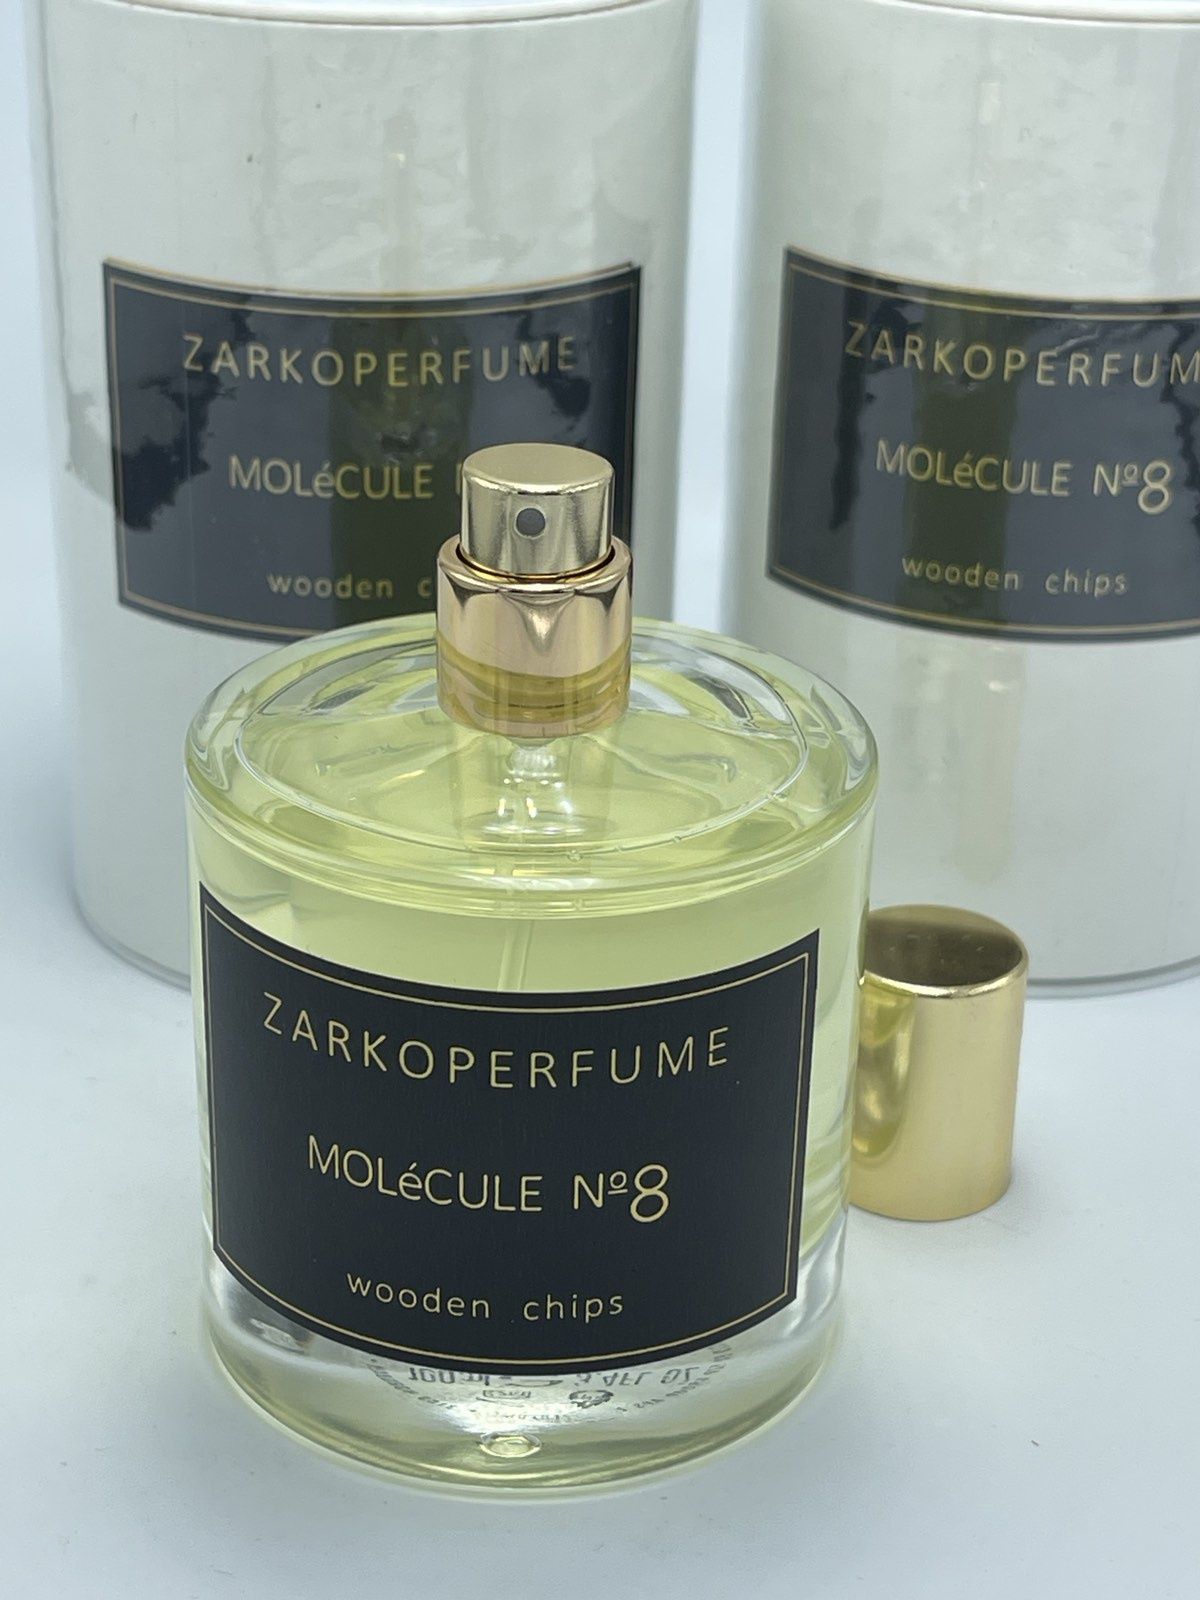 MOLéCULE No. 8 від Zarkoperfume
Eau de Parfum 
100 ml
Стать:унісекс.